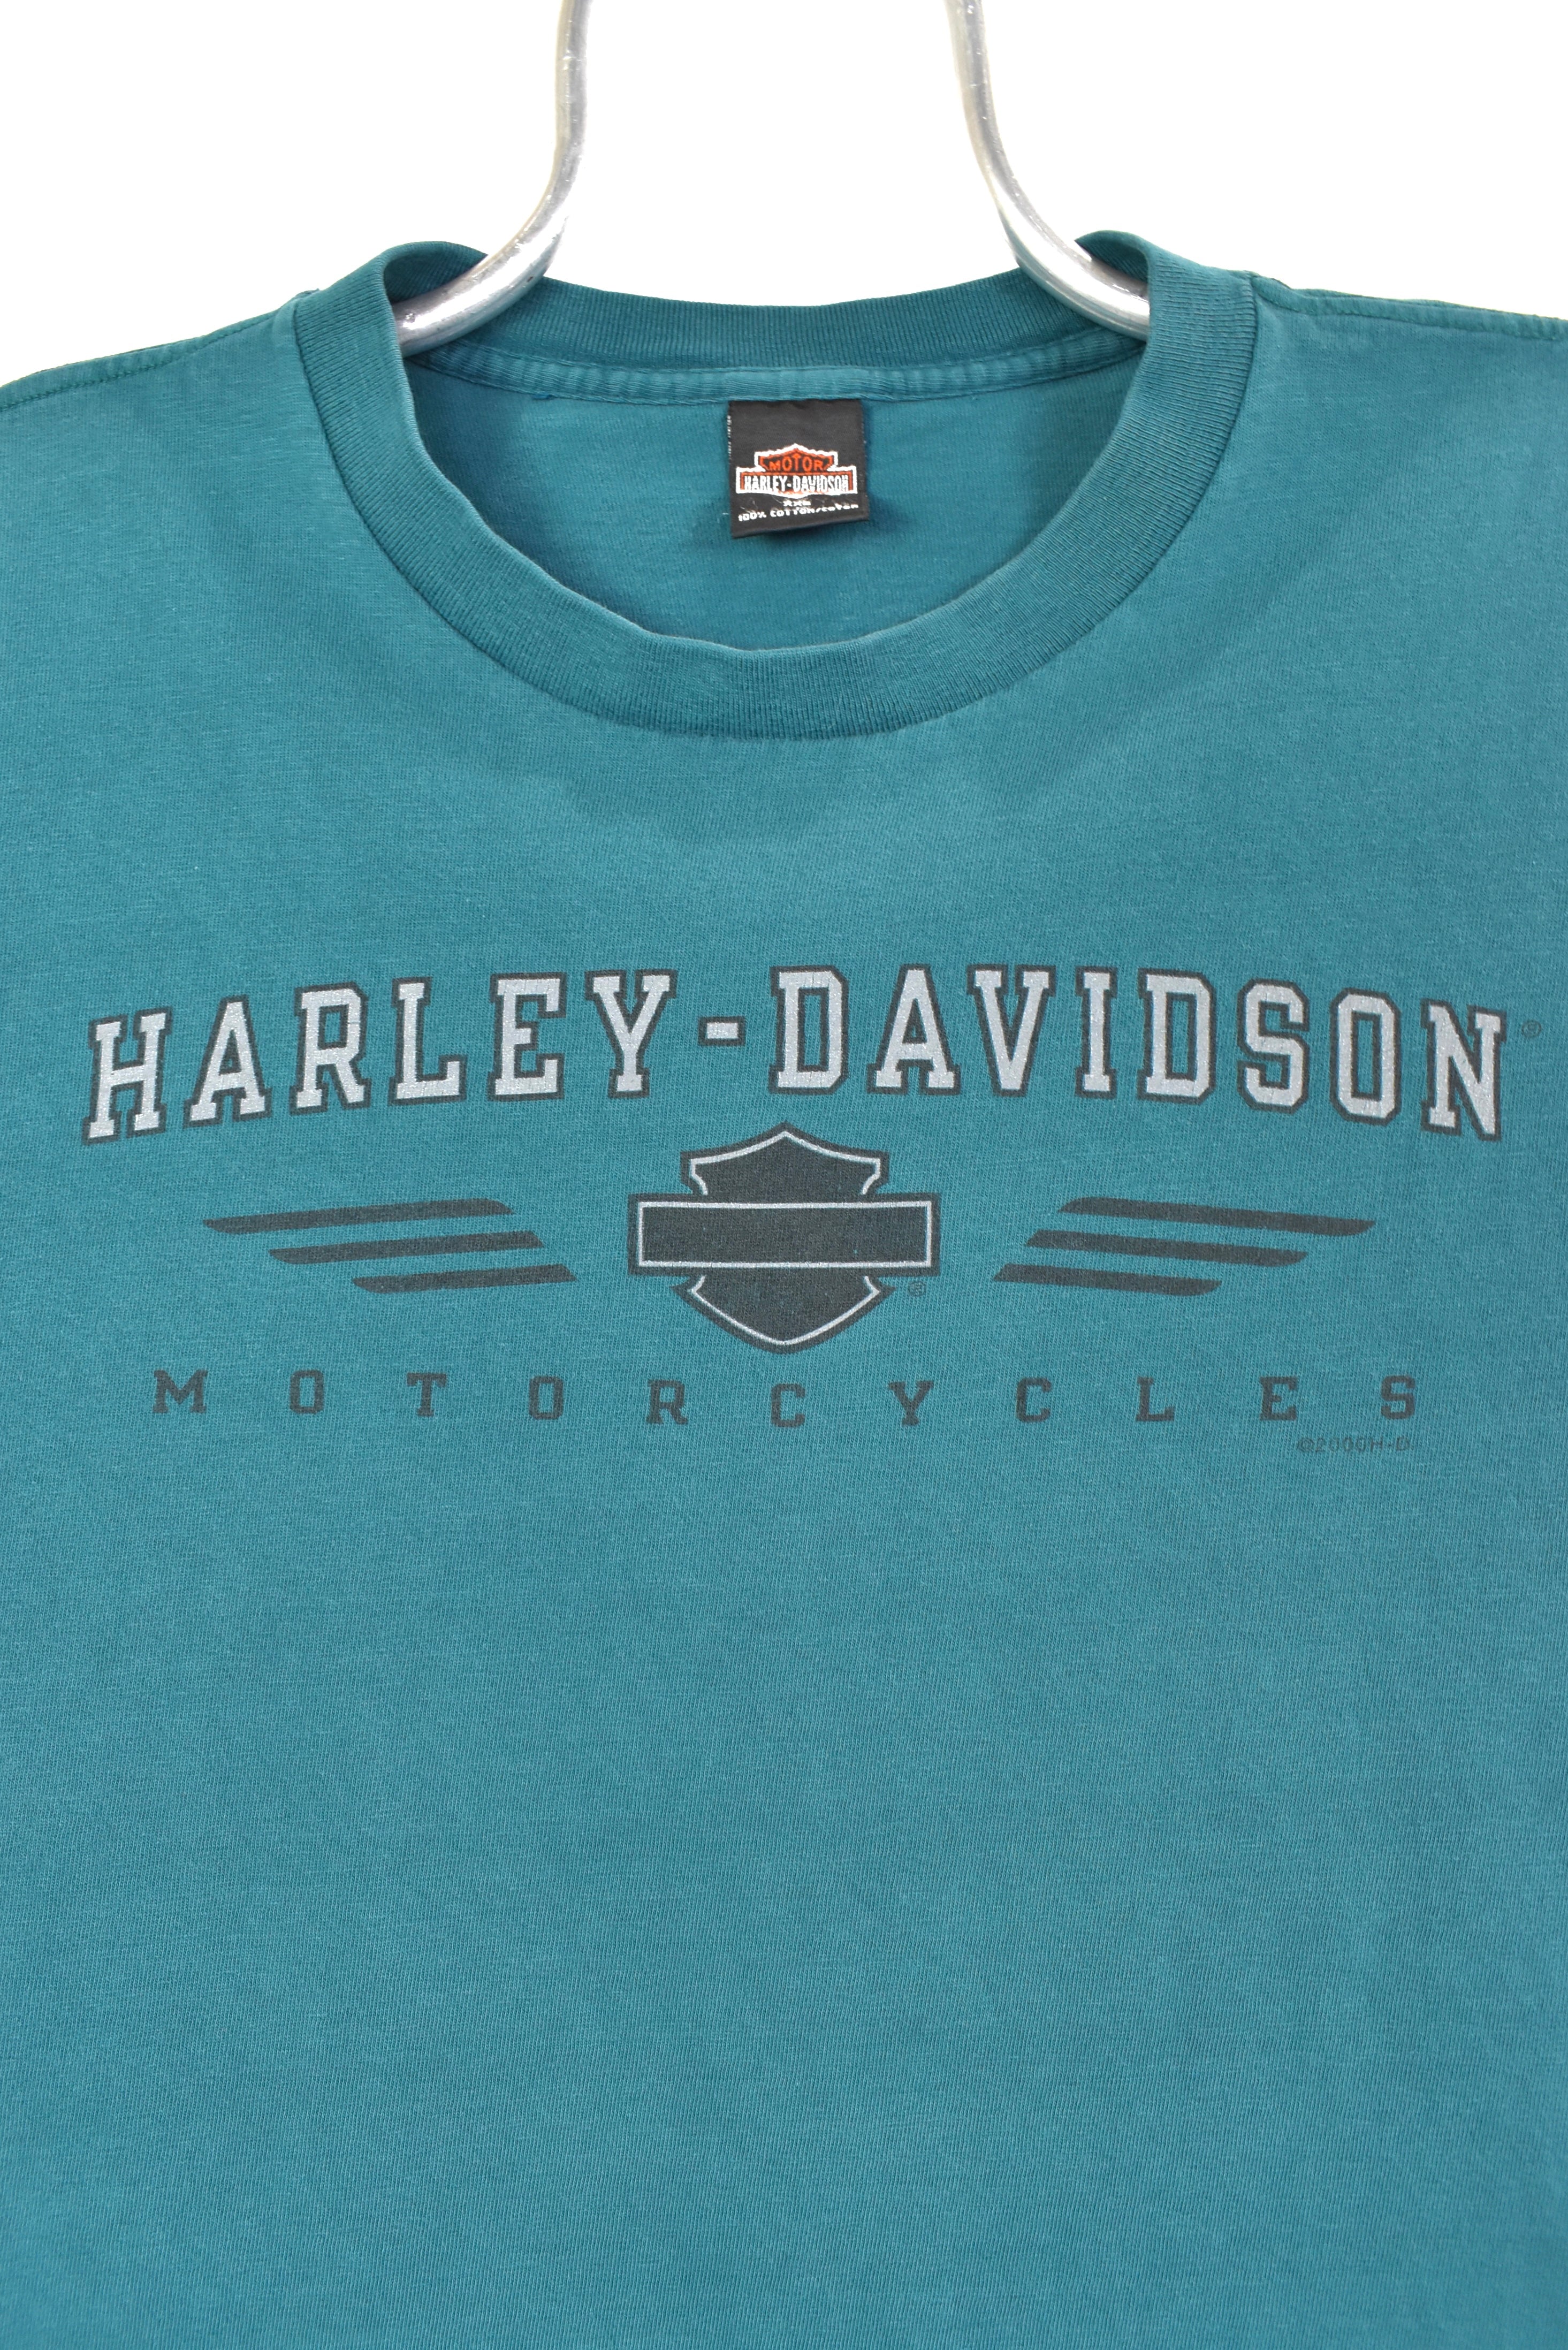 Vintage Harley Davidson shirt, 2000 motorcycle biker tee - XL, dark green HARLEY DAVIDSON